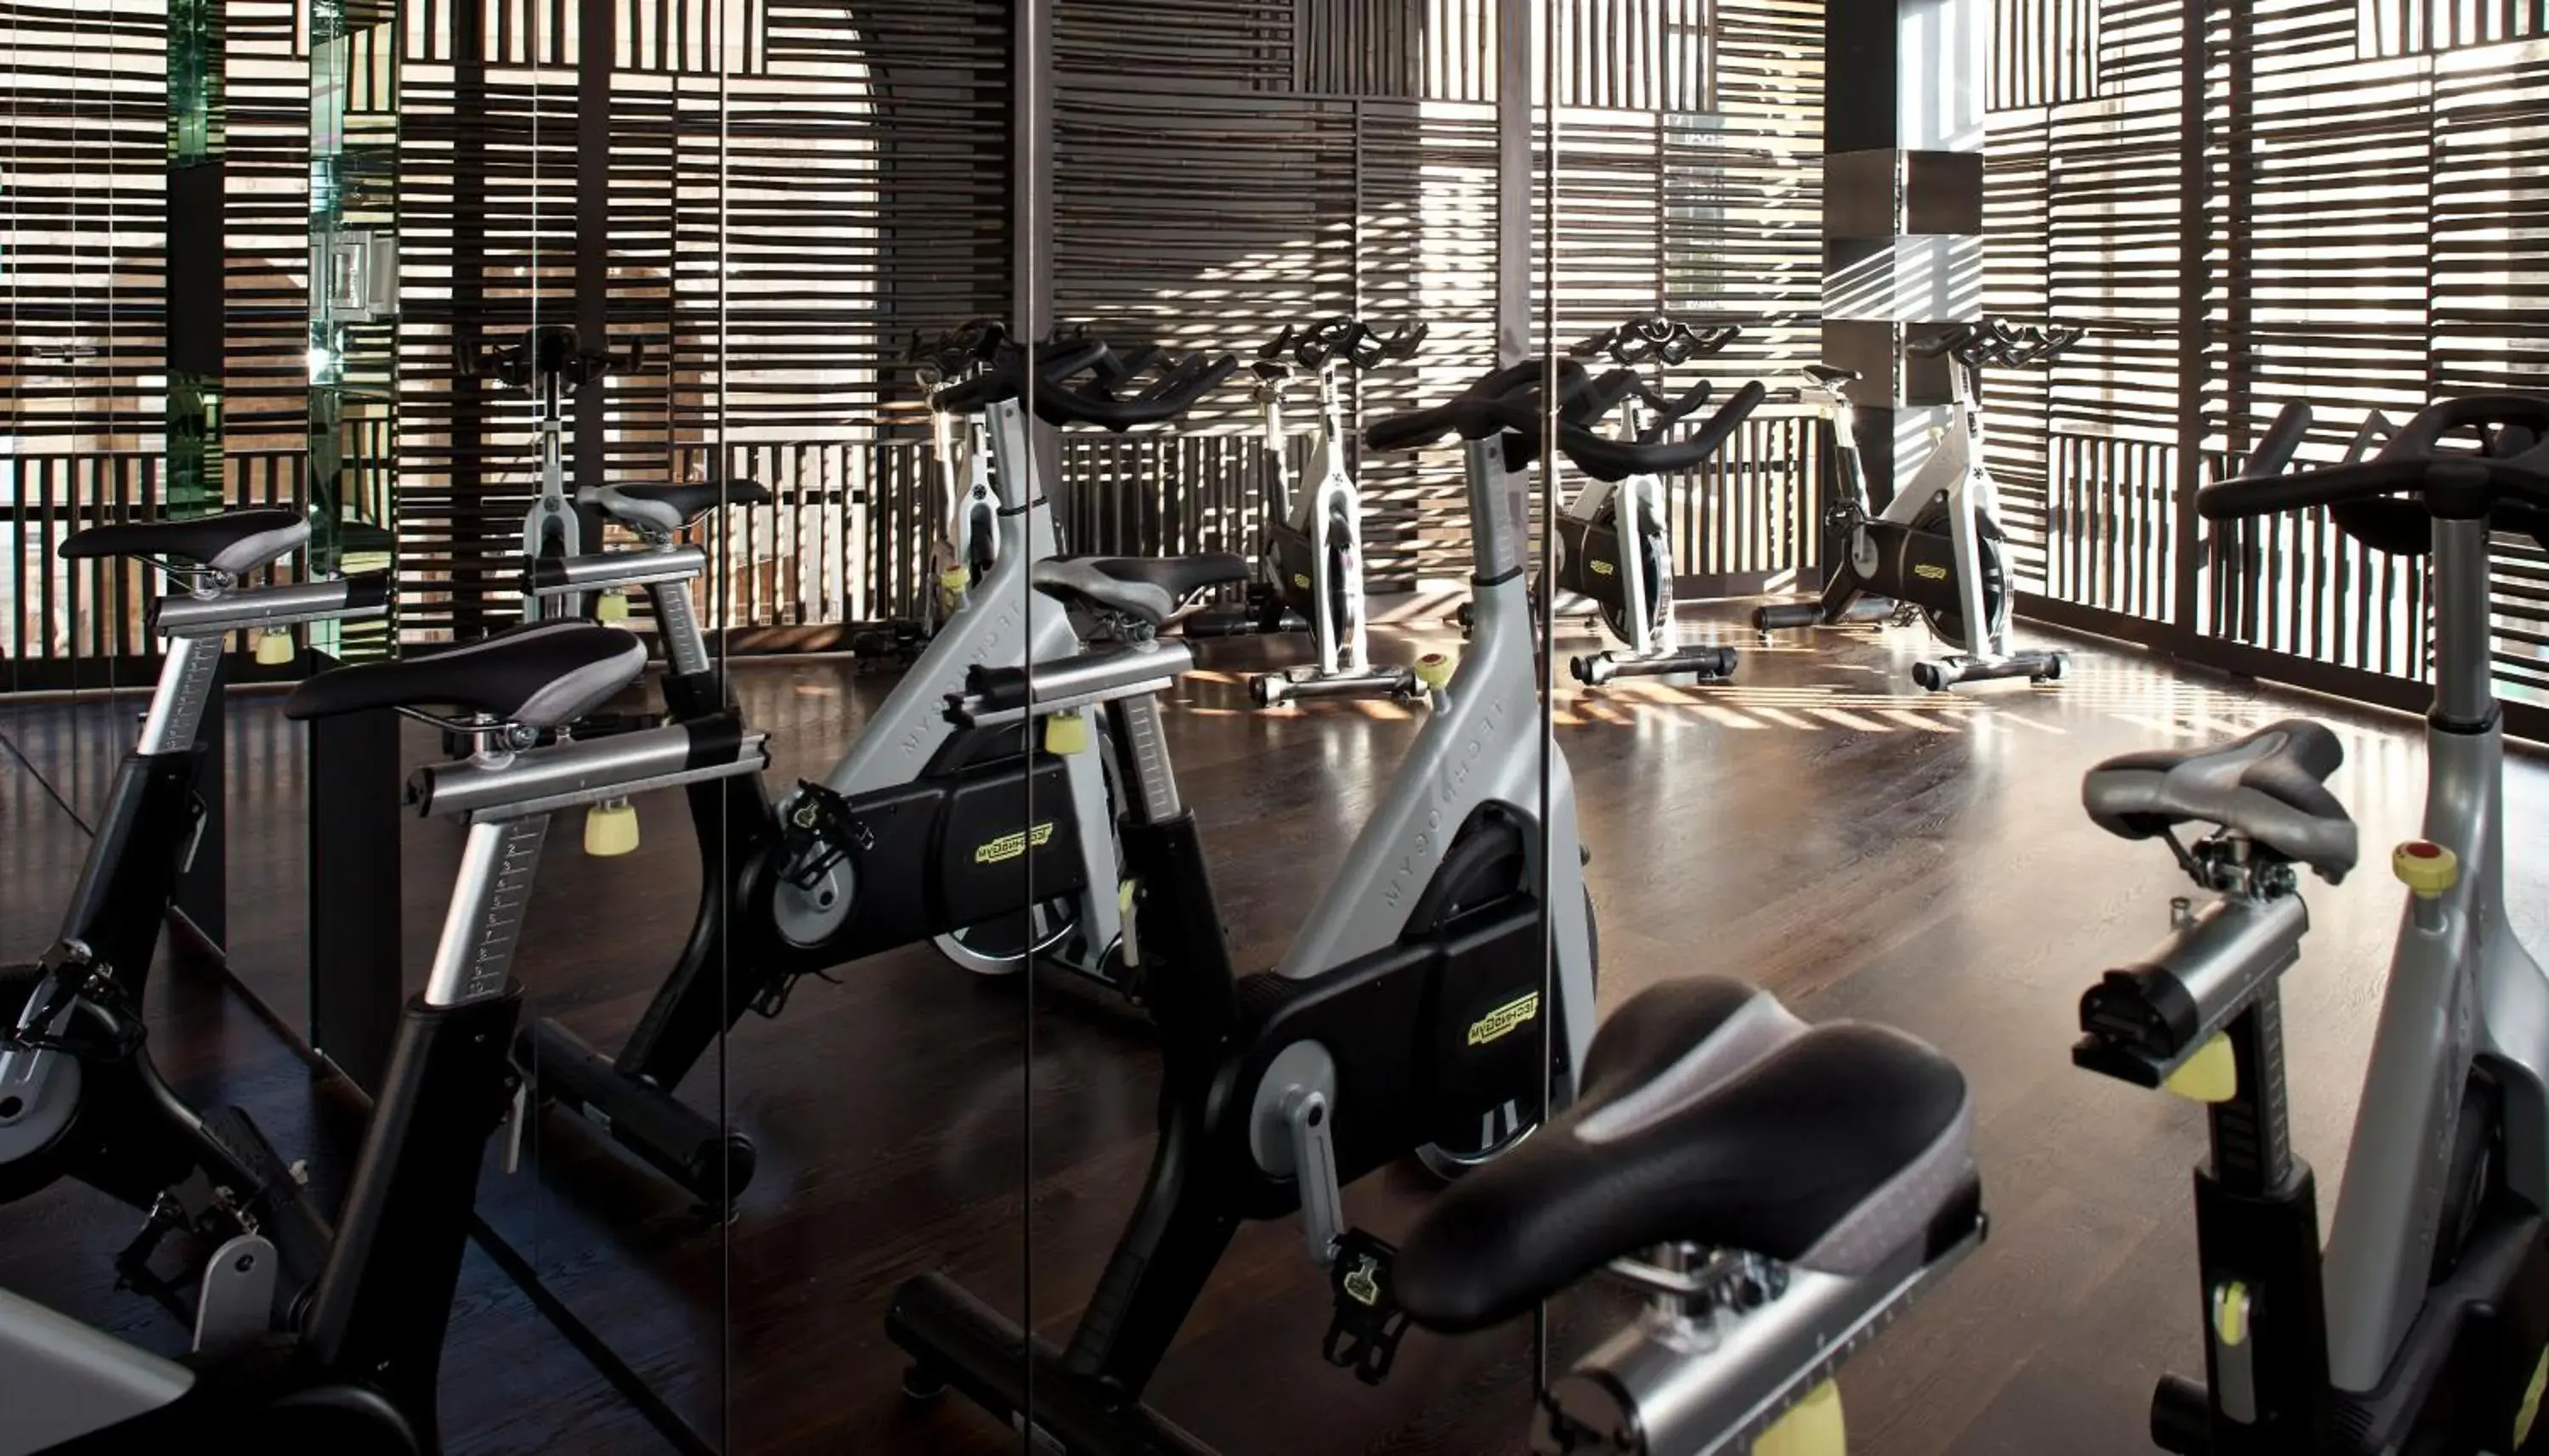 Fitness centre/facilities, Fitness Center/Facilities in Mamilla Hotel